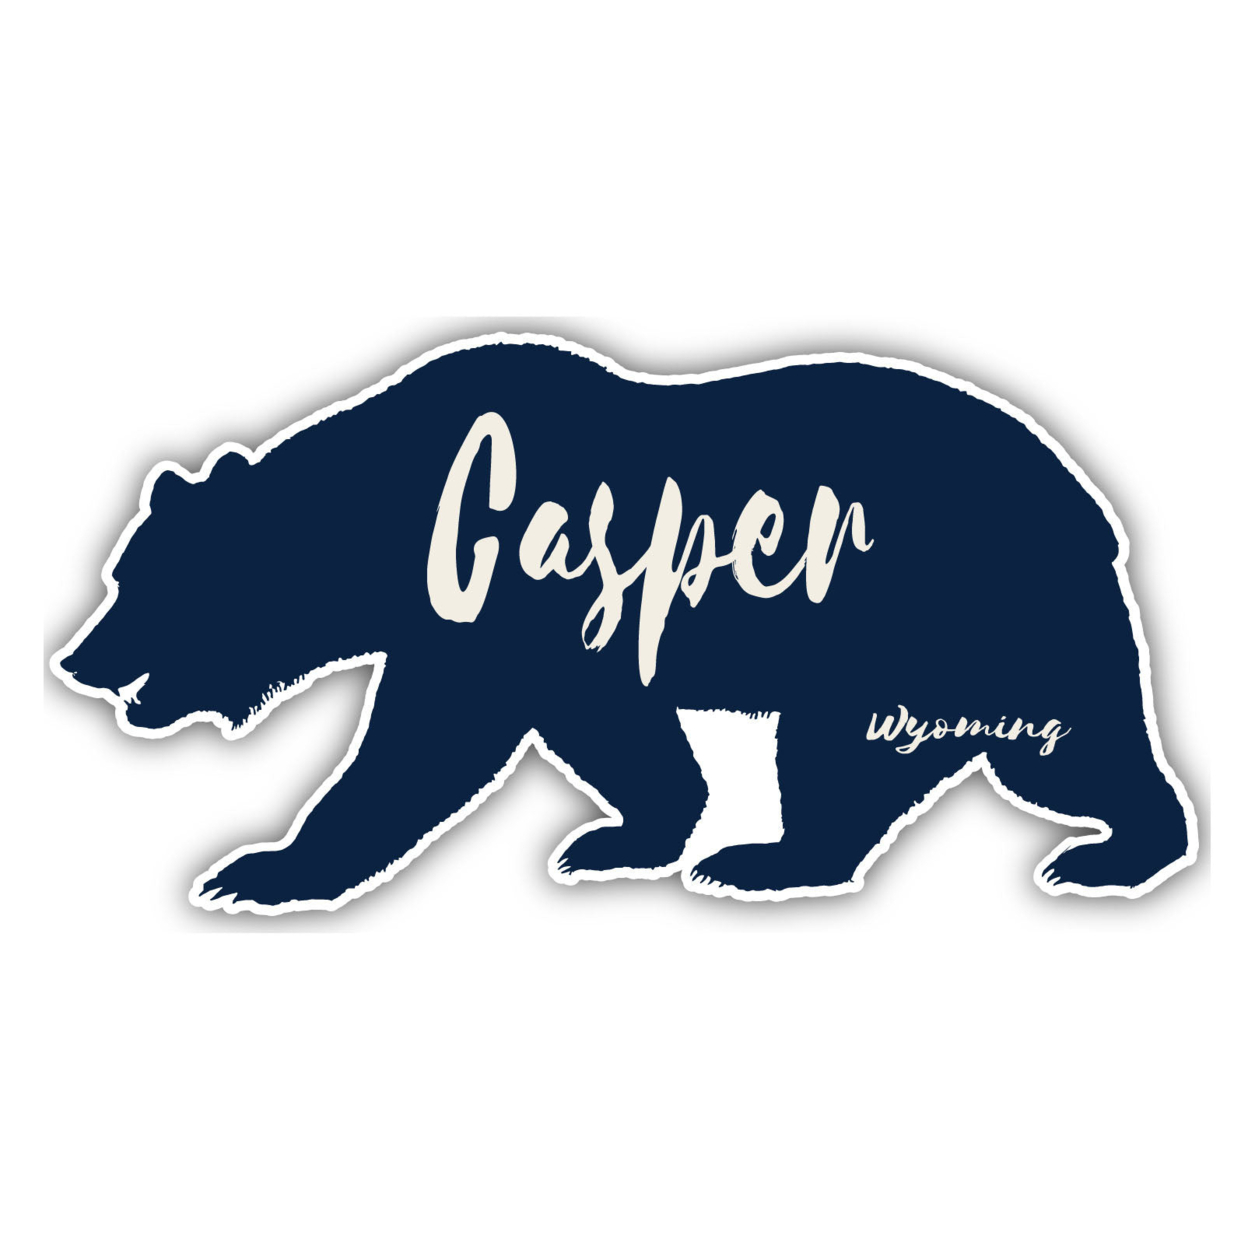 Casper Wyoming Souvenir Decorative Stickers (Choose Theme And Size) - Single Unit, 8-Inch, Bear